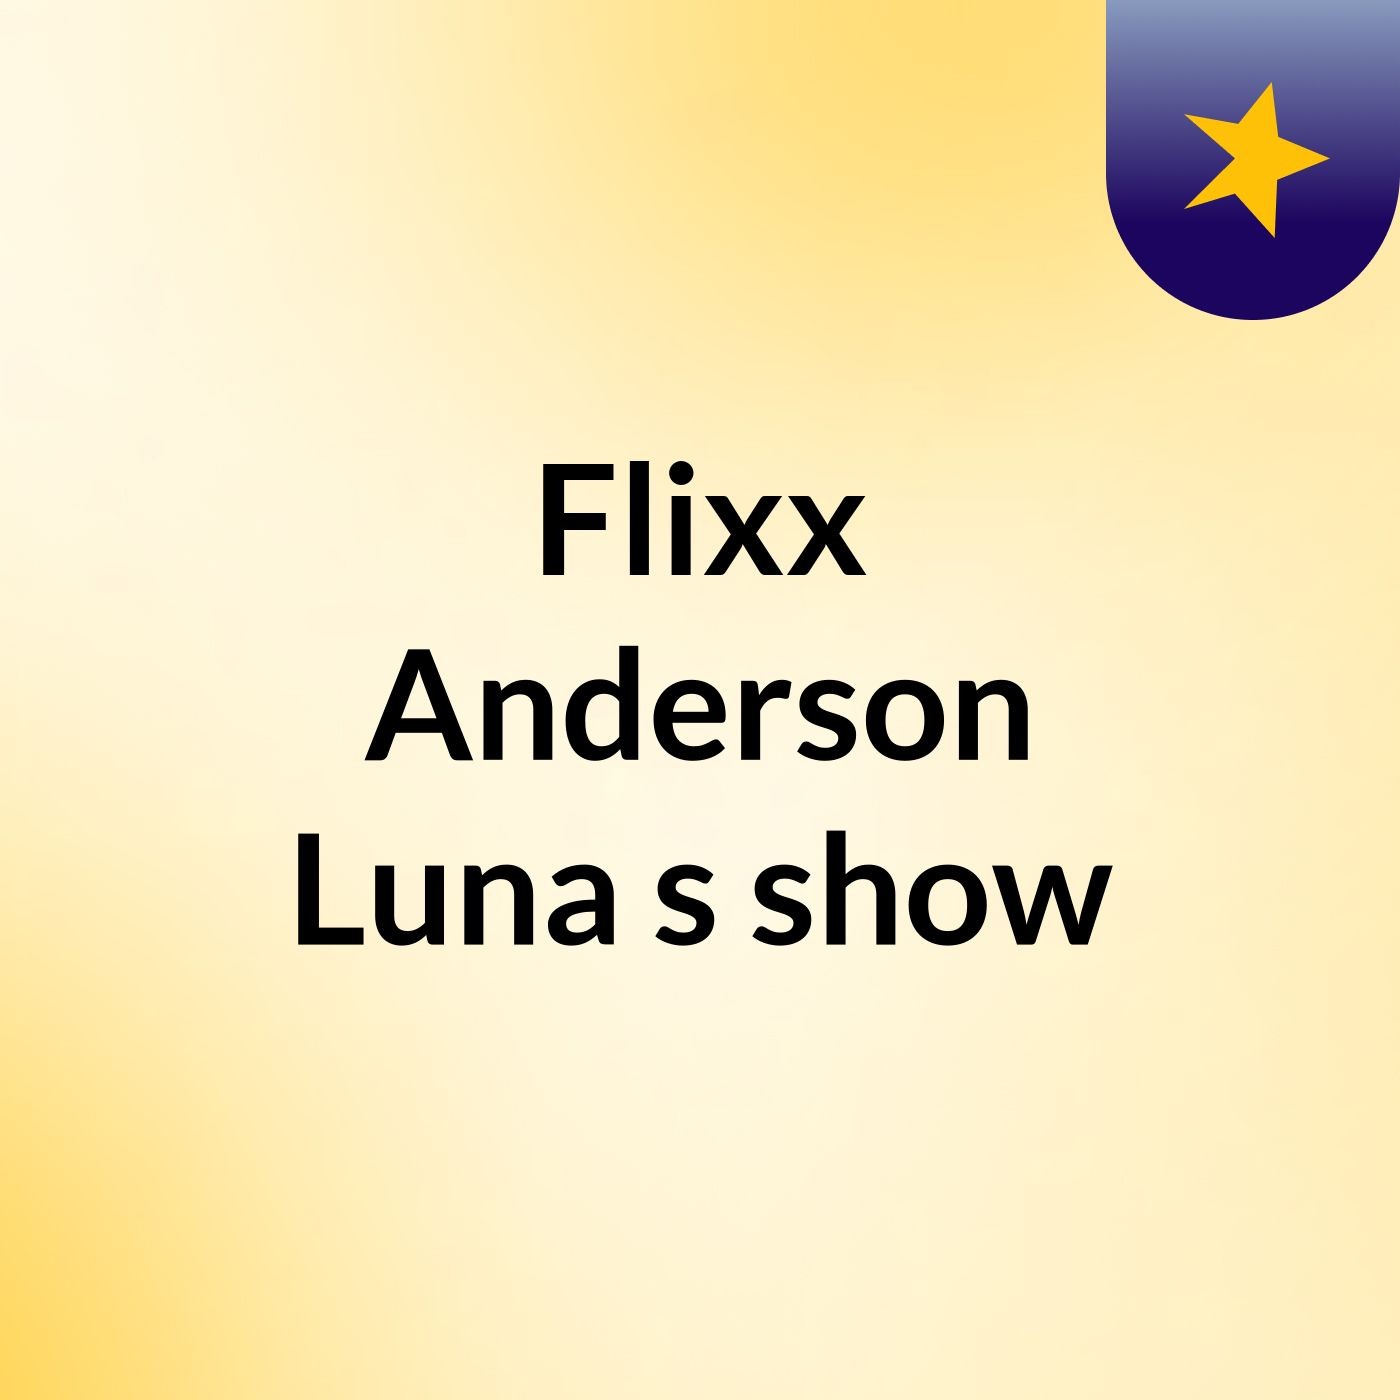 Flixx Anderson Luna's show